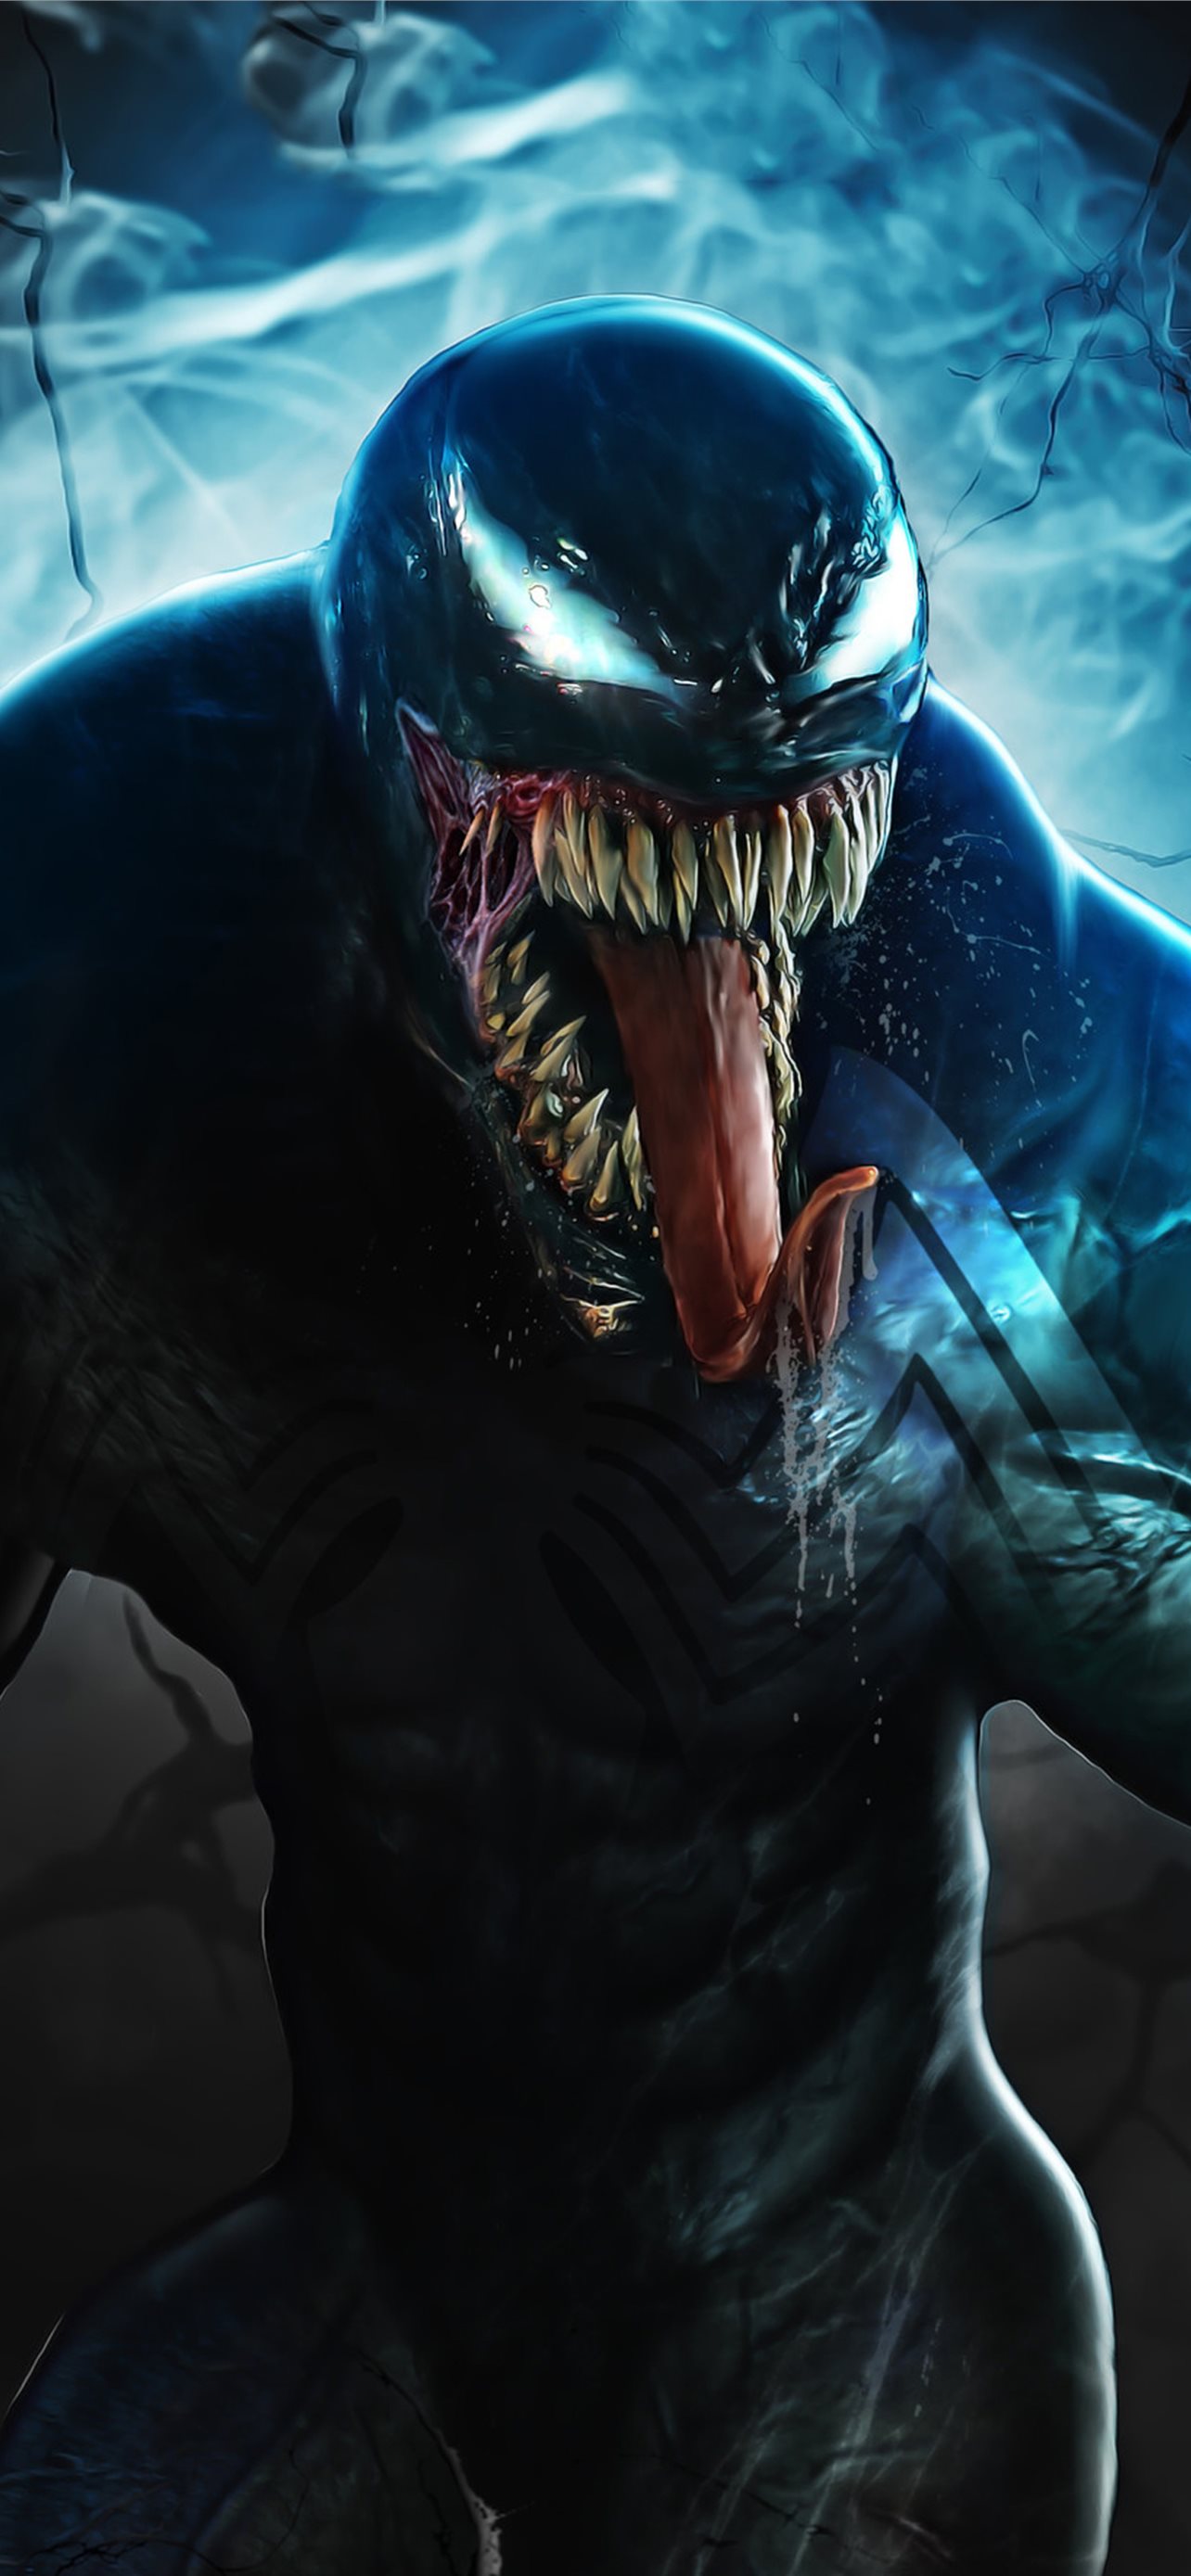 Venom Movie Fan Art Sony Xperia X XZ Z5 Premium HD... iPhone Wallpapers  Free Download